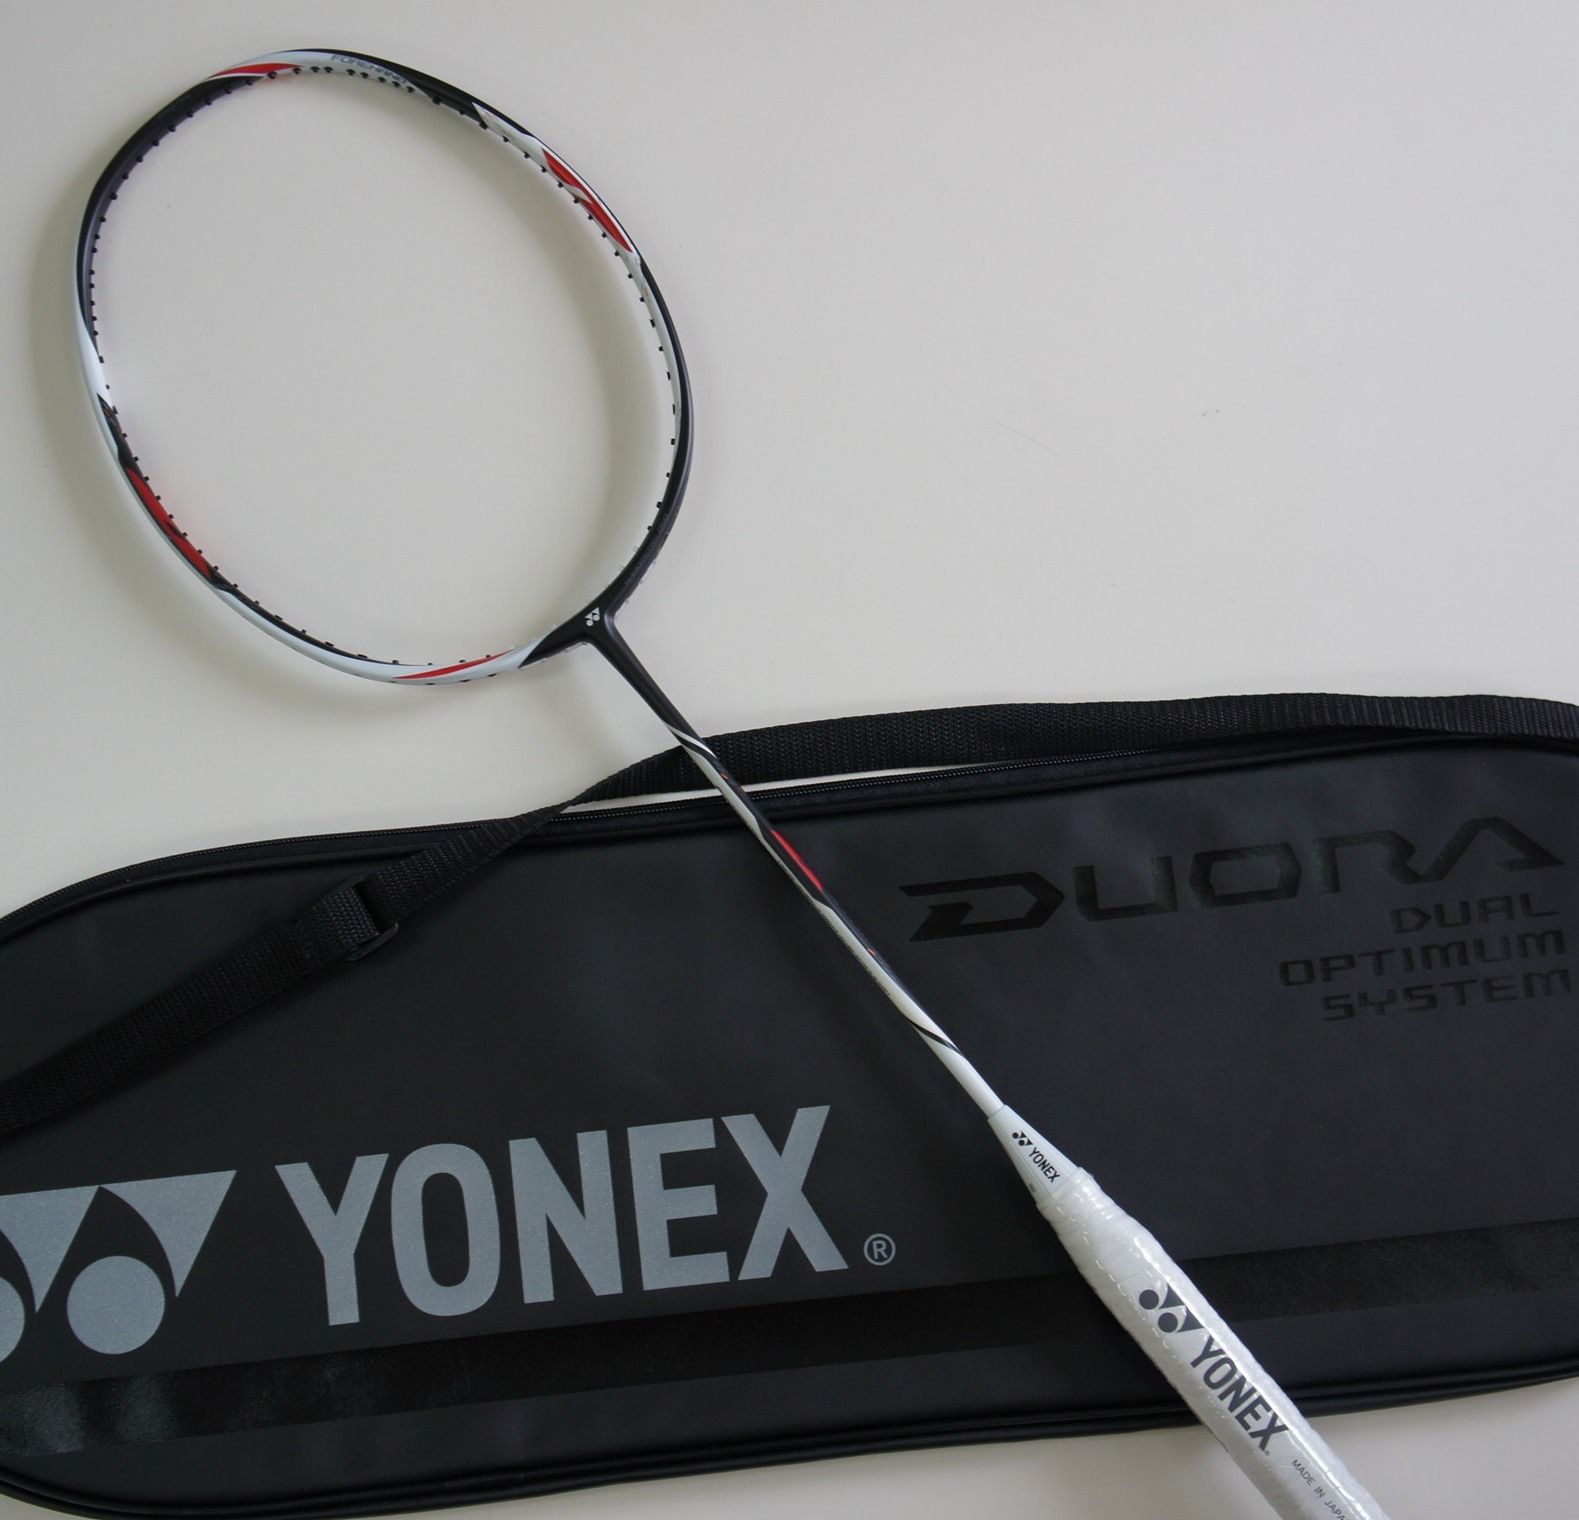 New Yonex DUORA Z-STRIKE Duo ZS Badminton Racquet Racket 3UG5 US-SameDayShip 